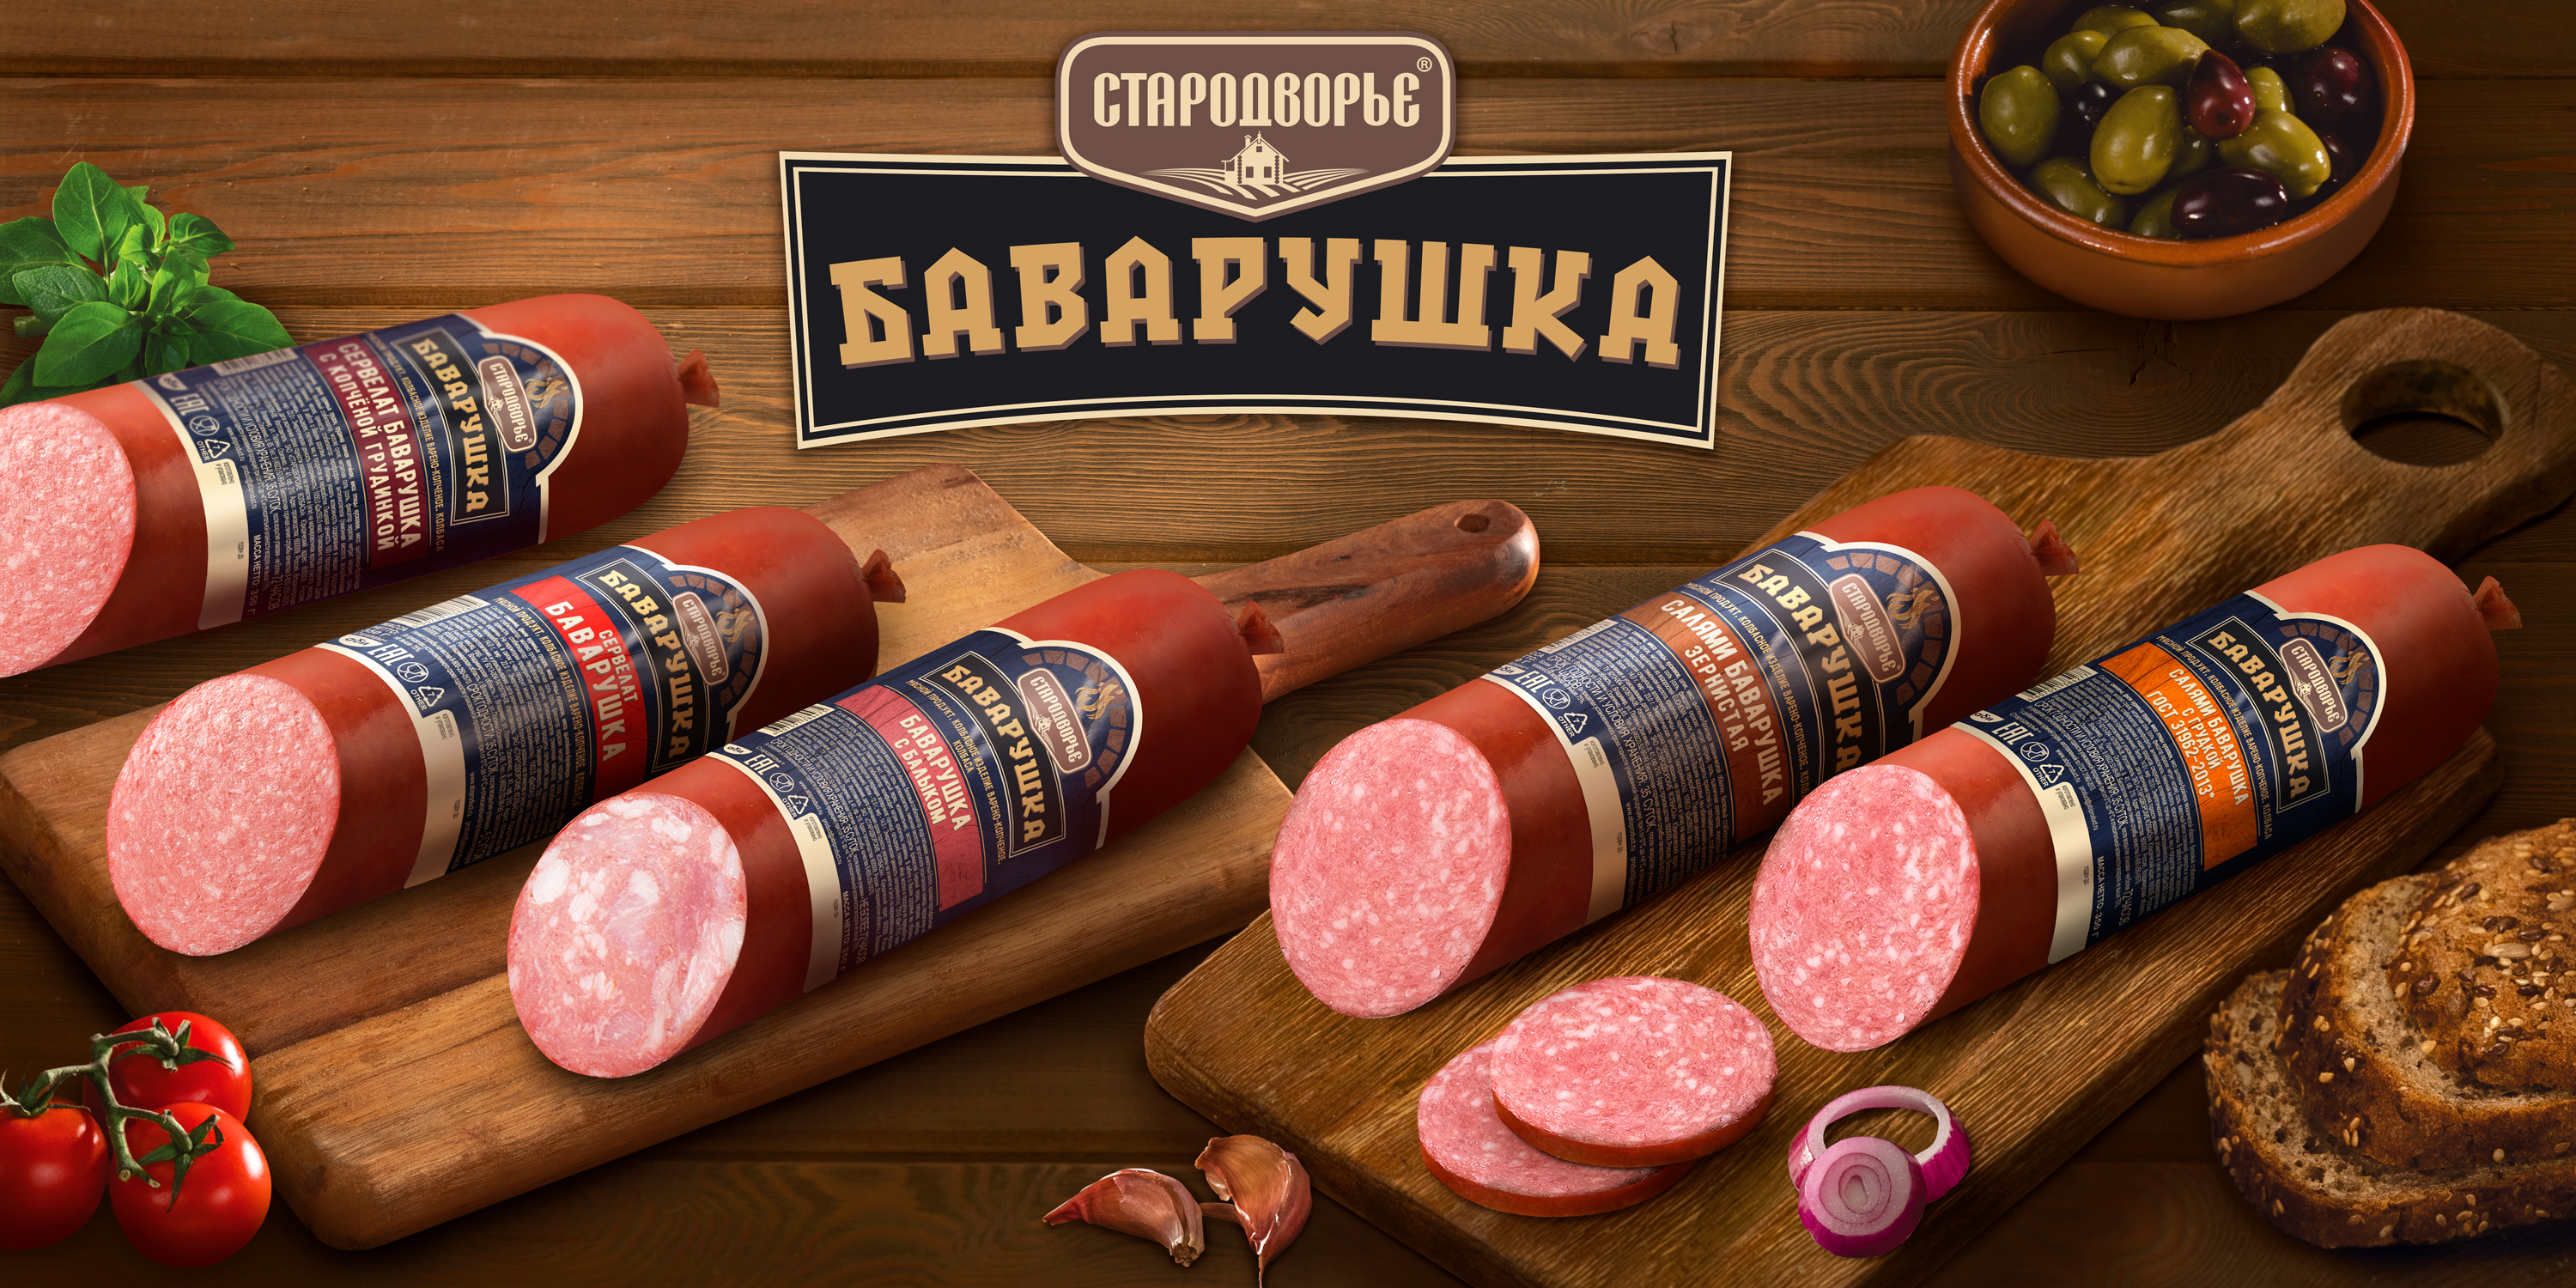 Колбасы Баварушка в формате со срезом.jpg